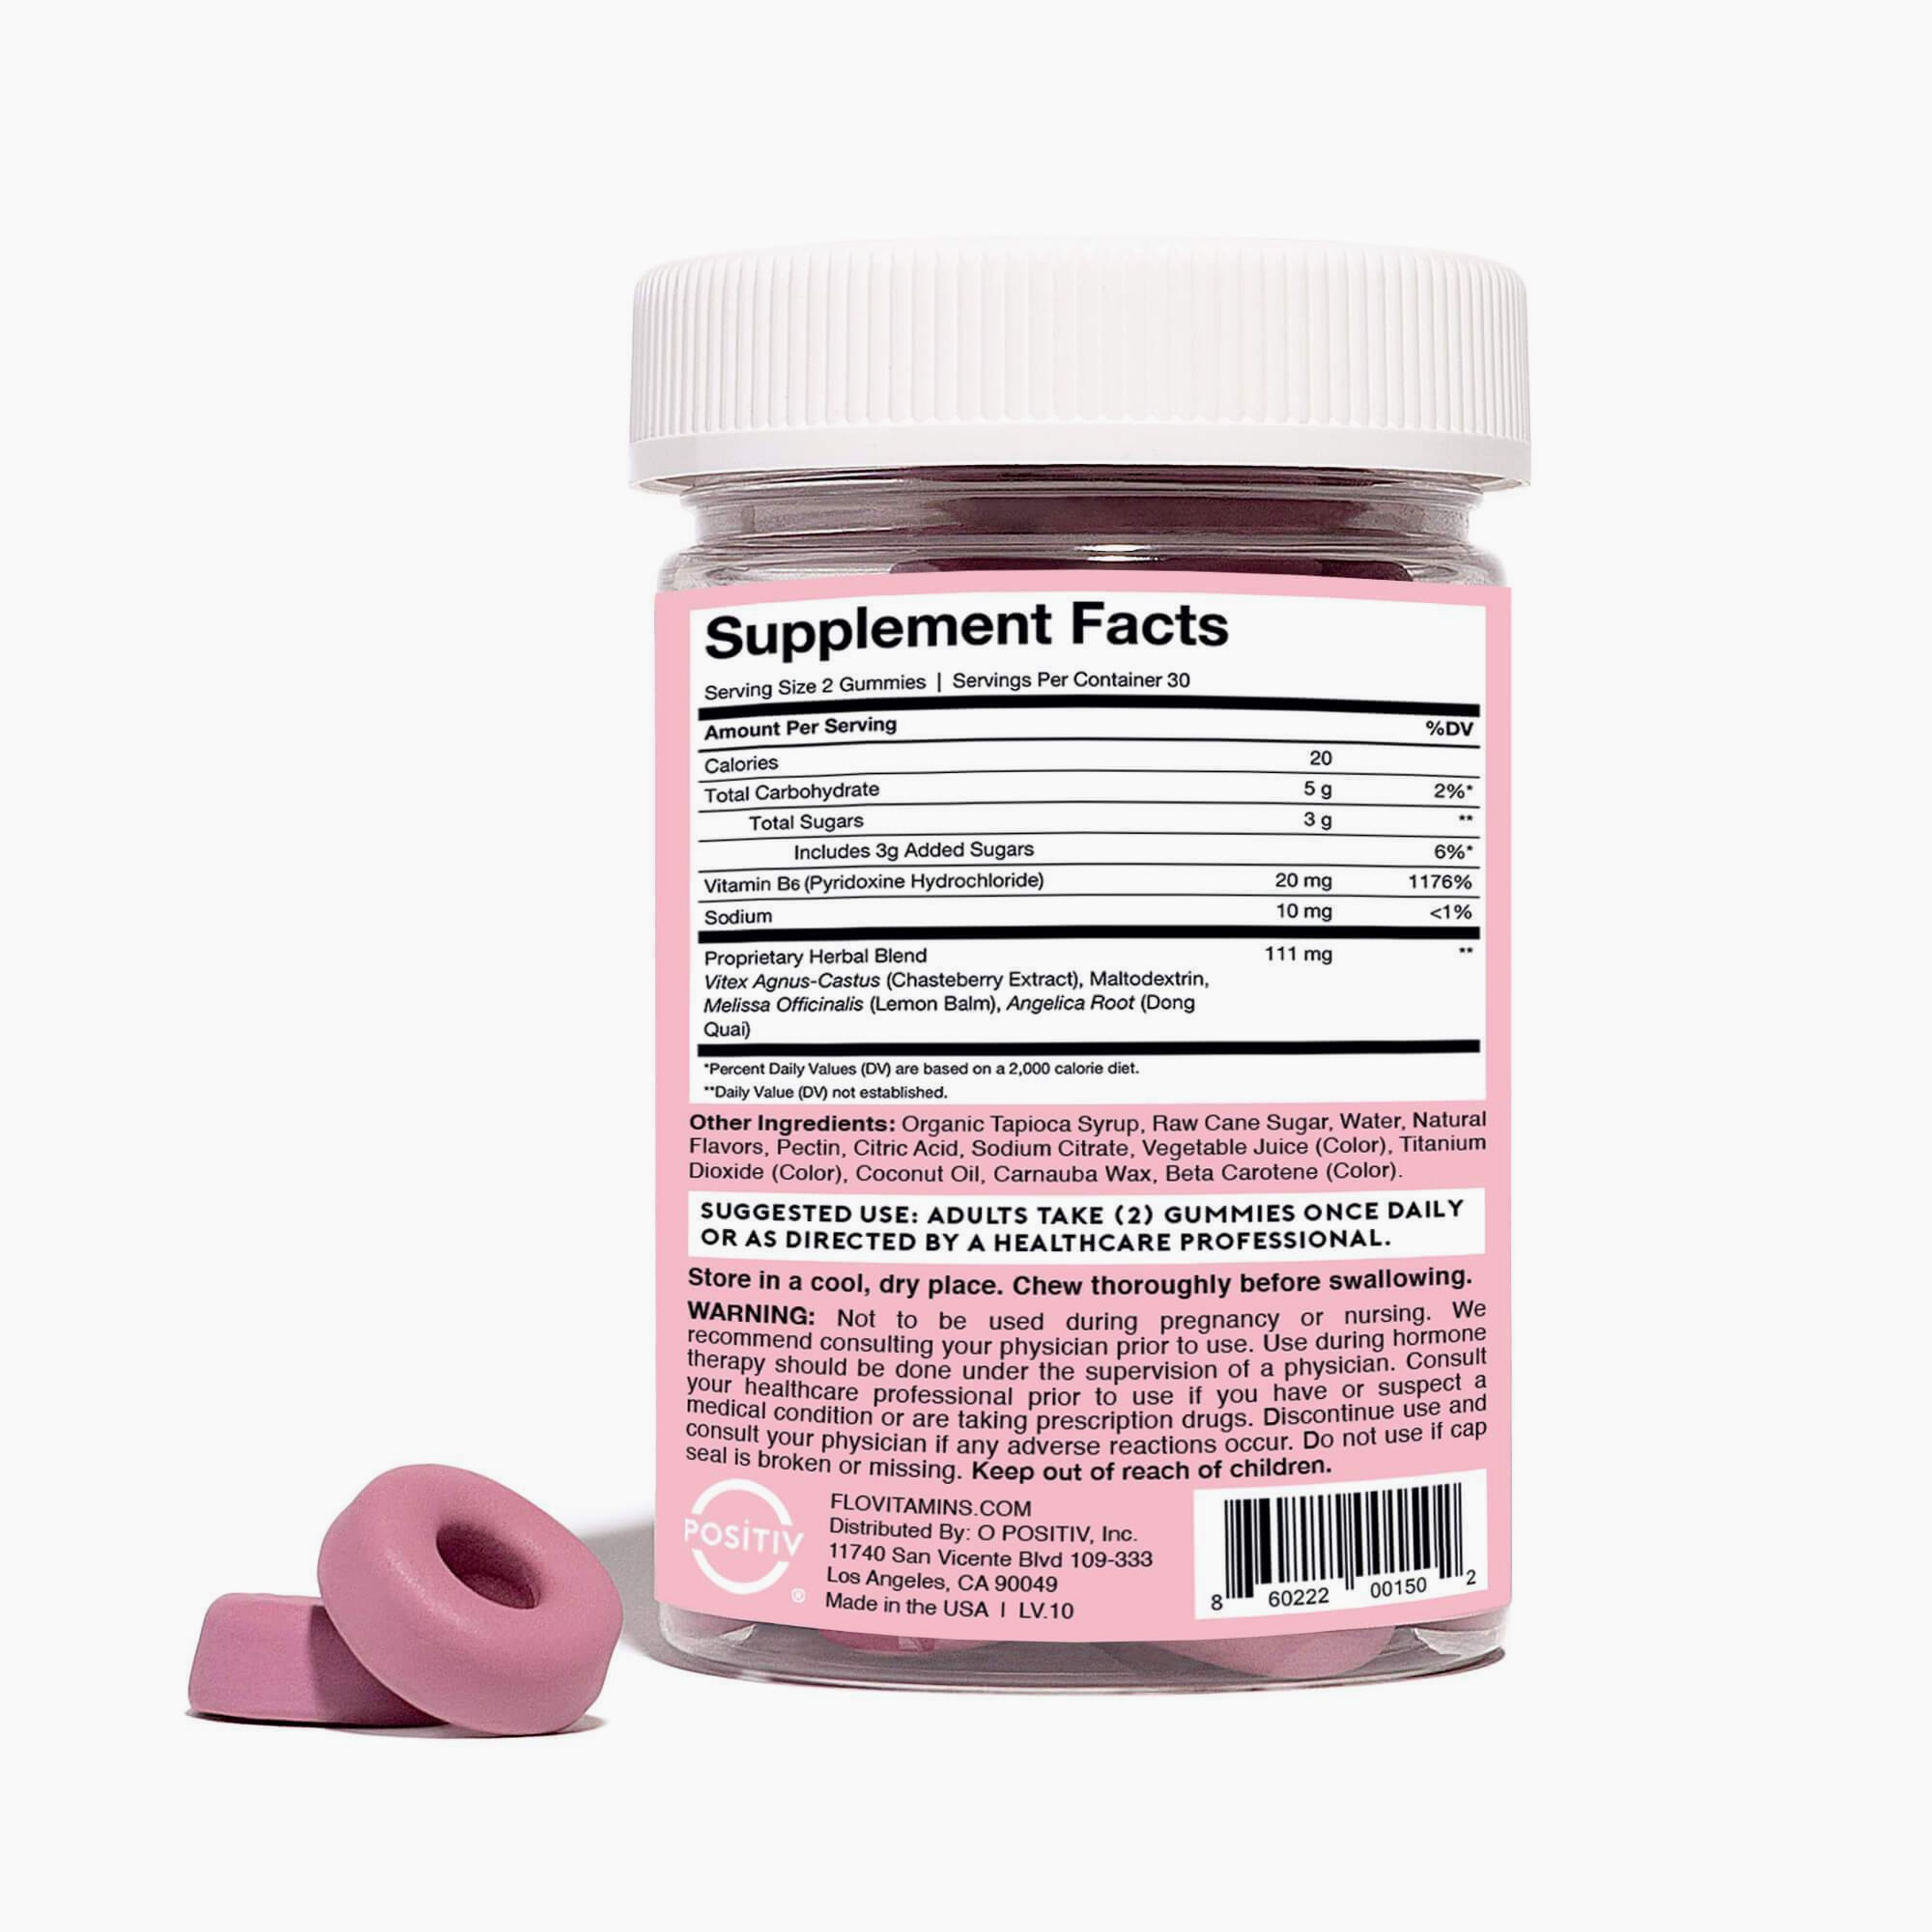 FLO // PMS Gummy Vitamins